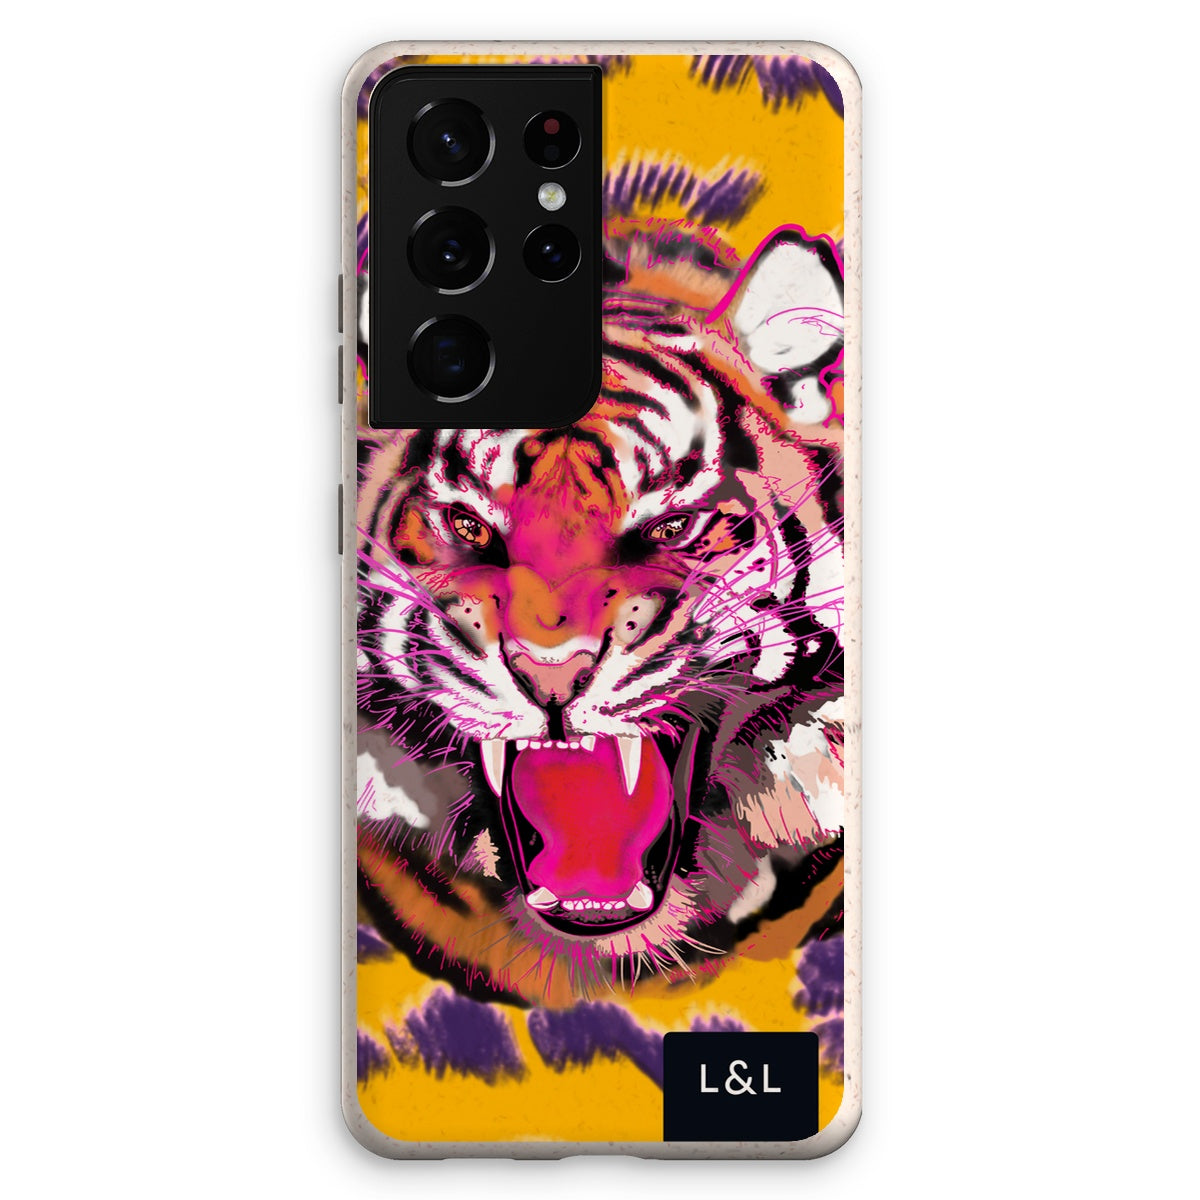 Neon Tiger Eco Phone Case